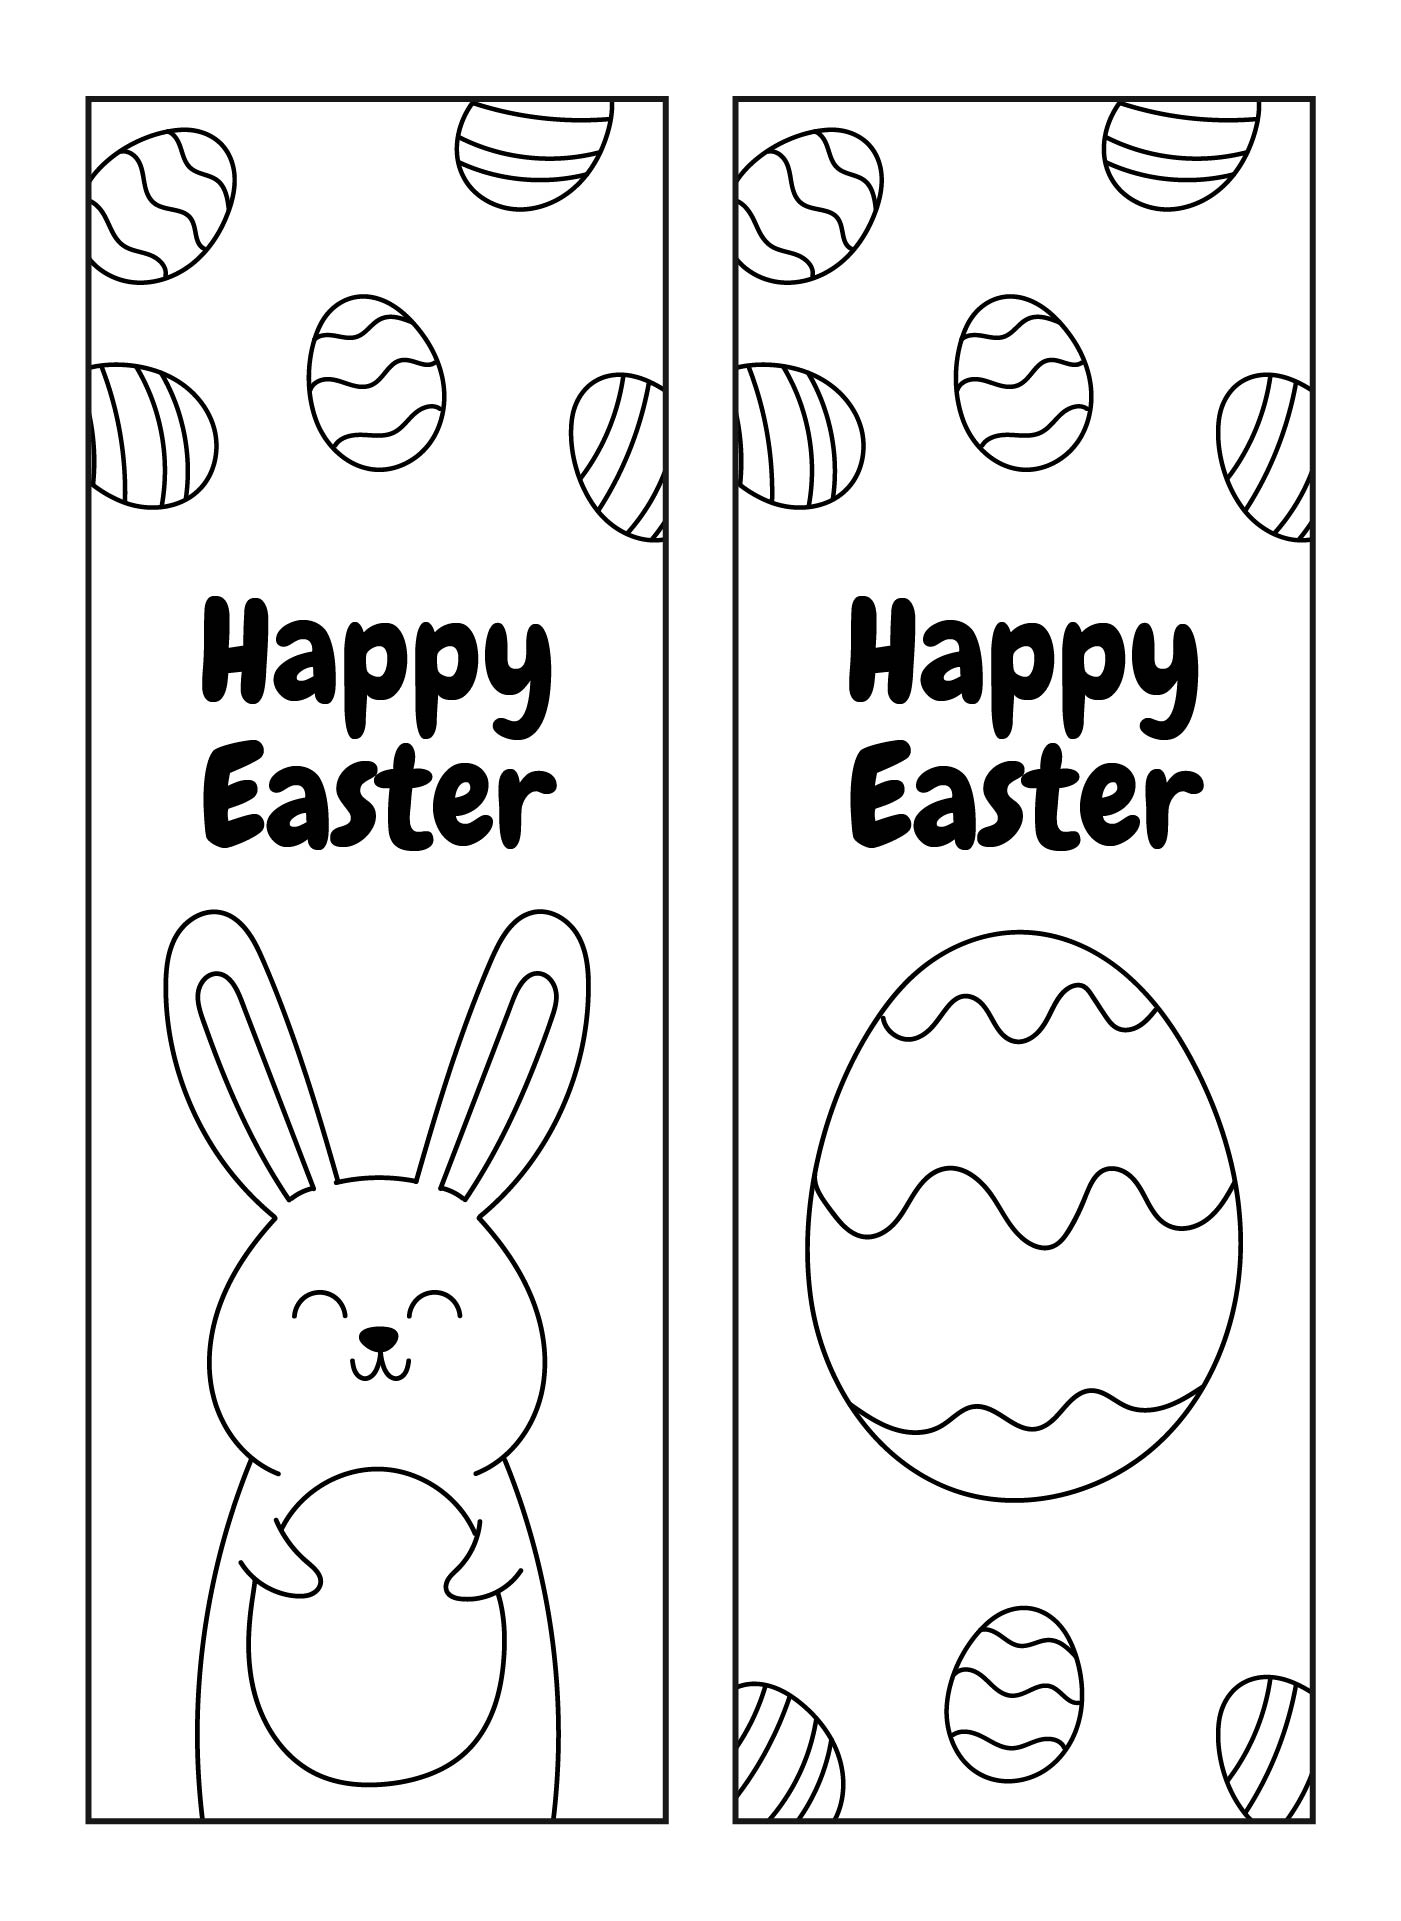 Printable Easter Bookmarks for Kids